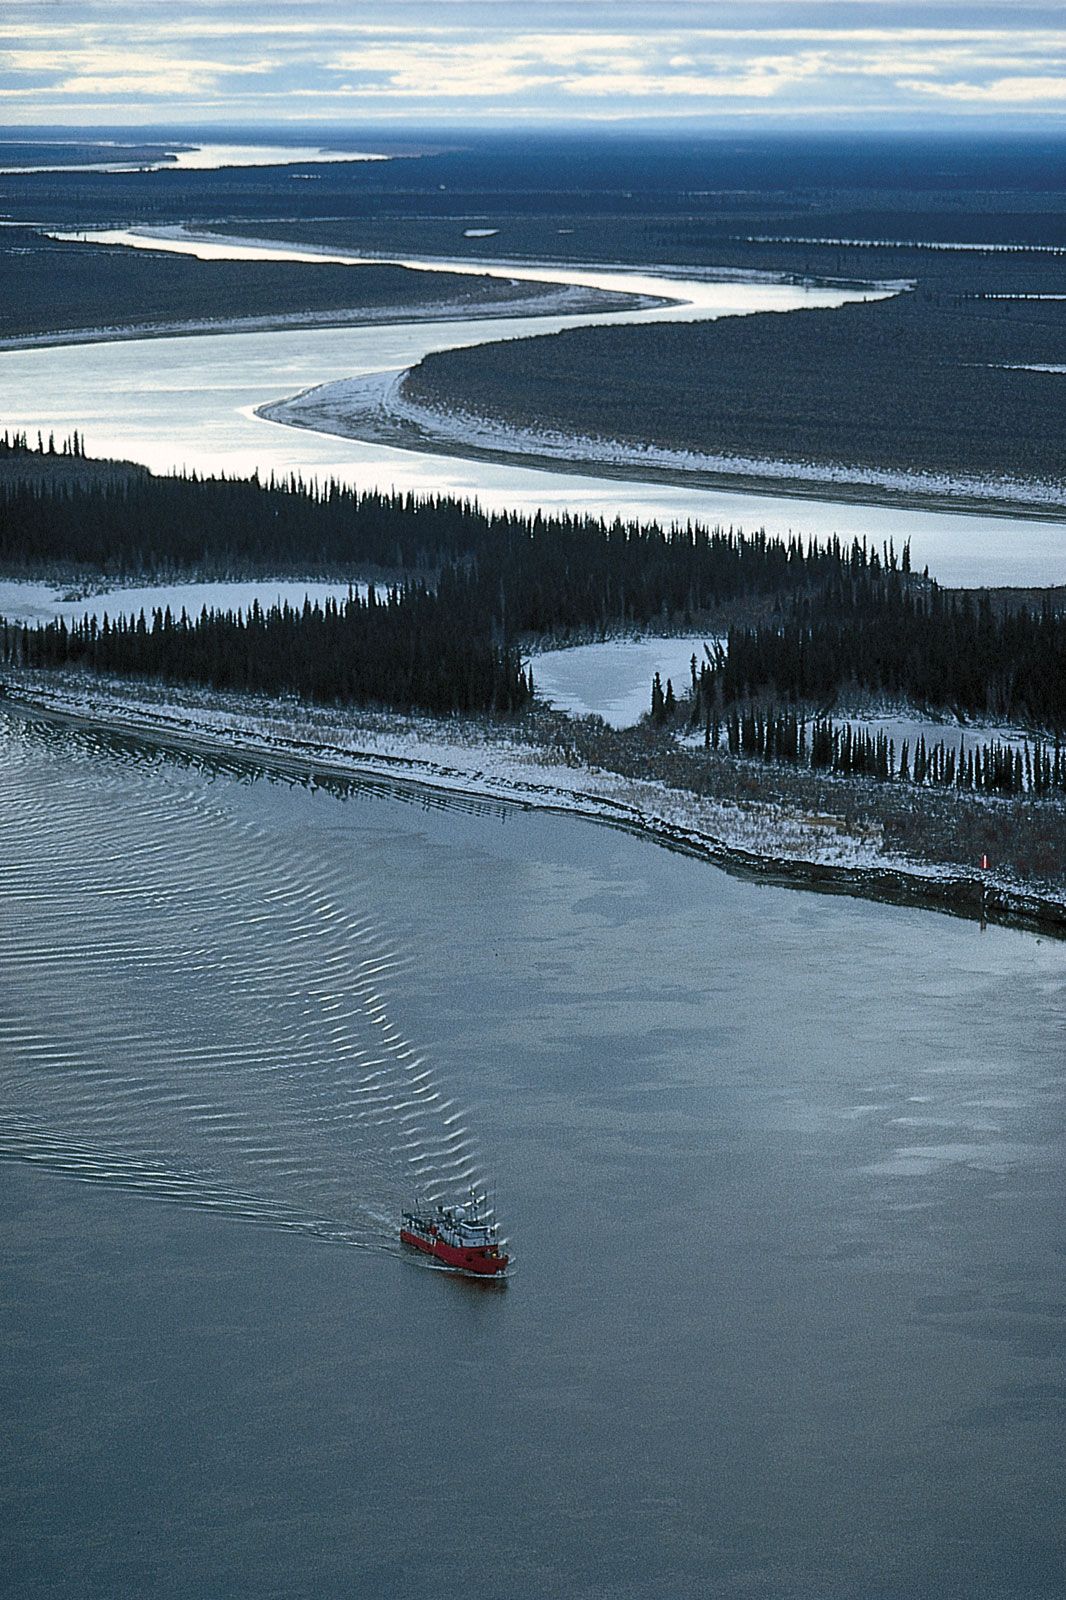 Питание реки маккензи. Устье реки Маккензи. Дельта реки Маккензи. Река Маккензи Канада. Река Маккензи зимой.